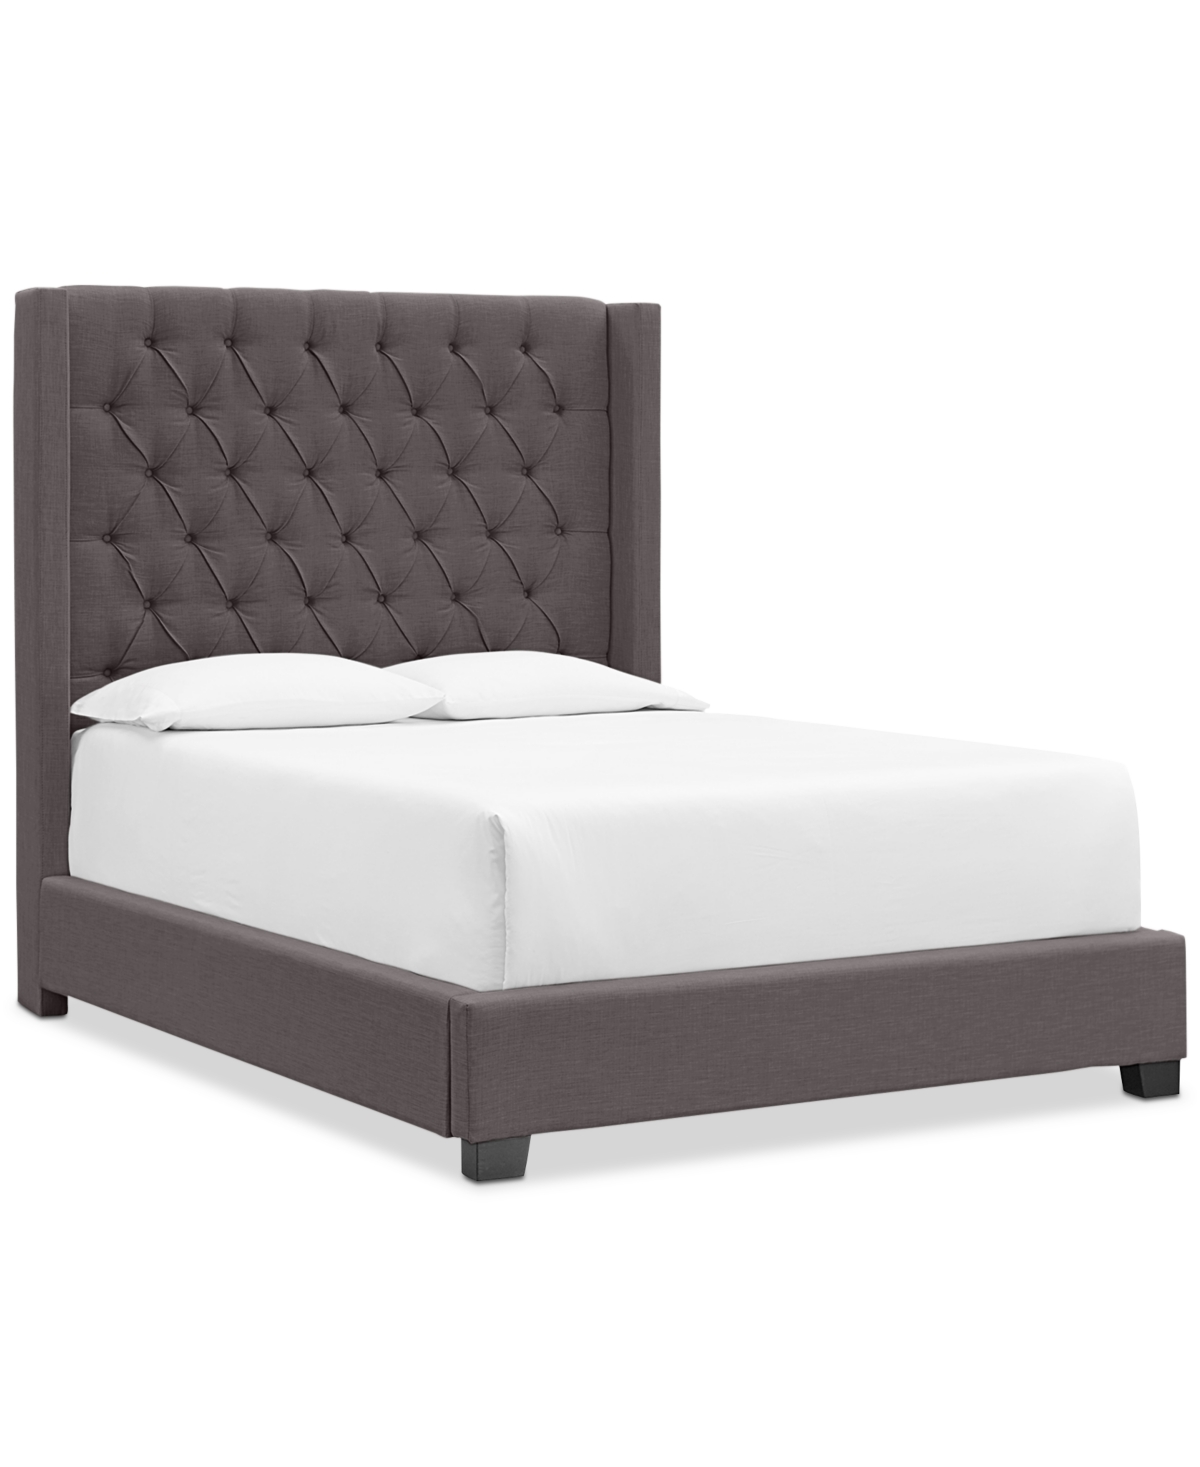 Monroe Ii Upholstered Full Bed, Created for Macys